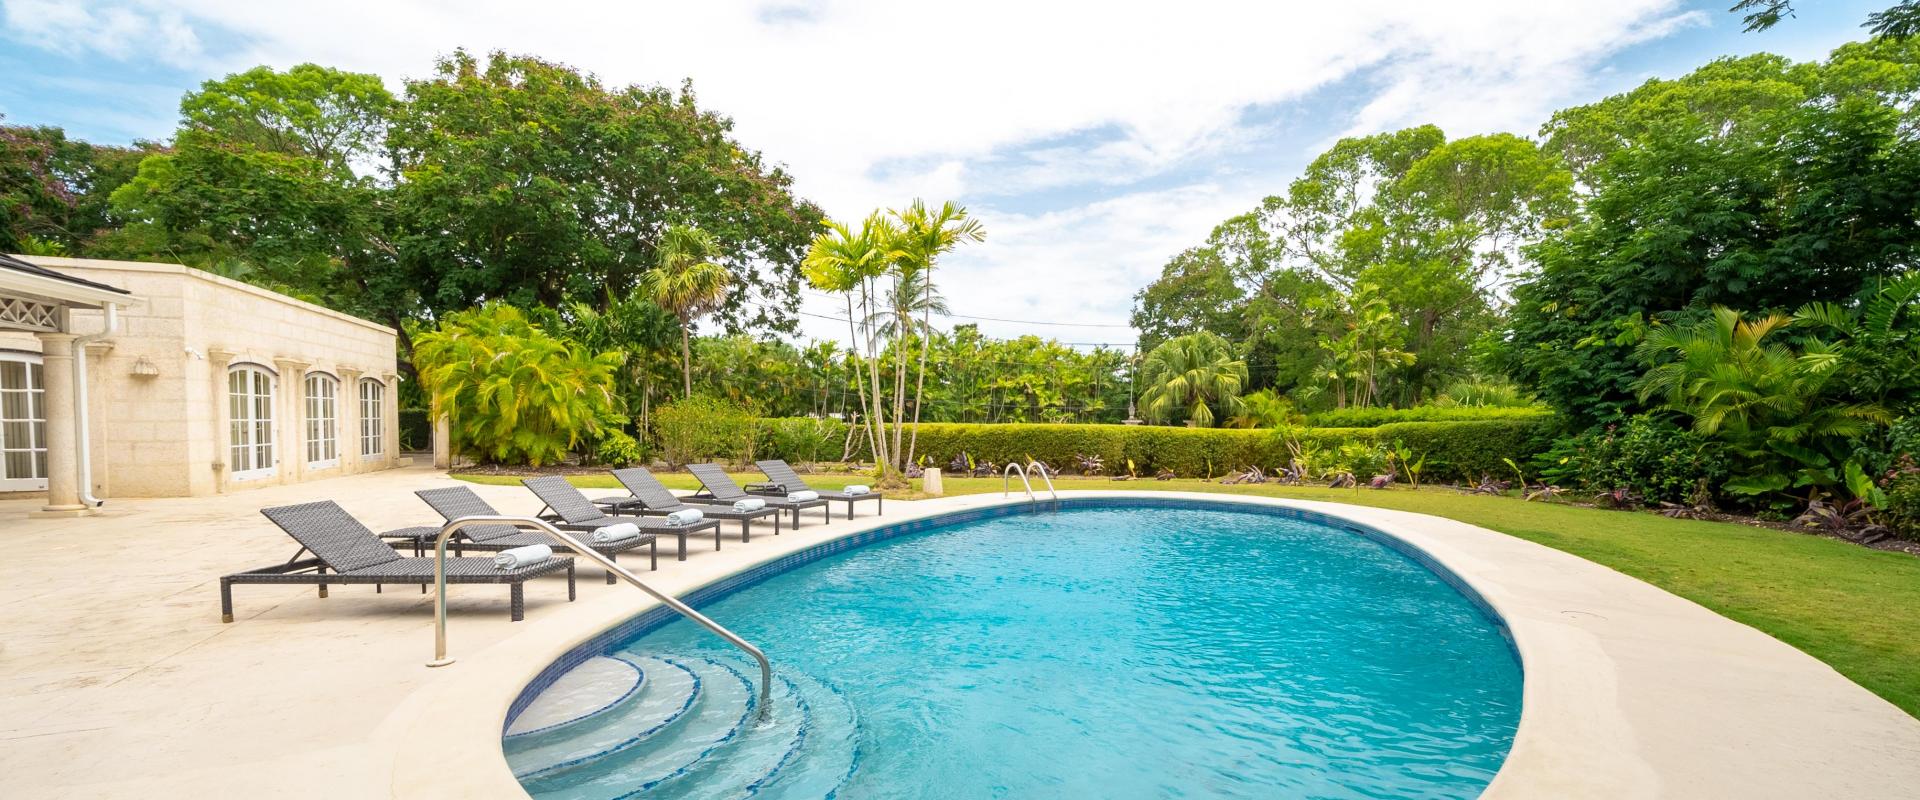 Franklins House Holiday Rental Villa In Sandy Lane Barbados Pool Deck and Gardens